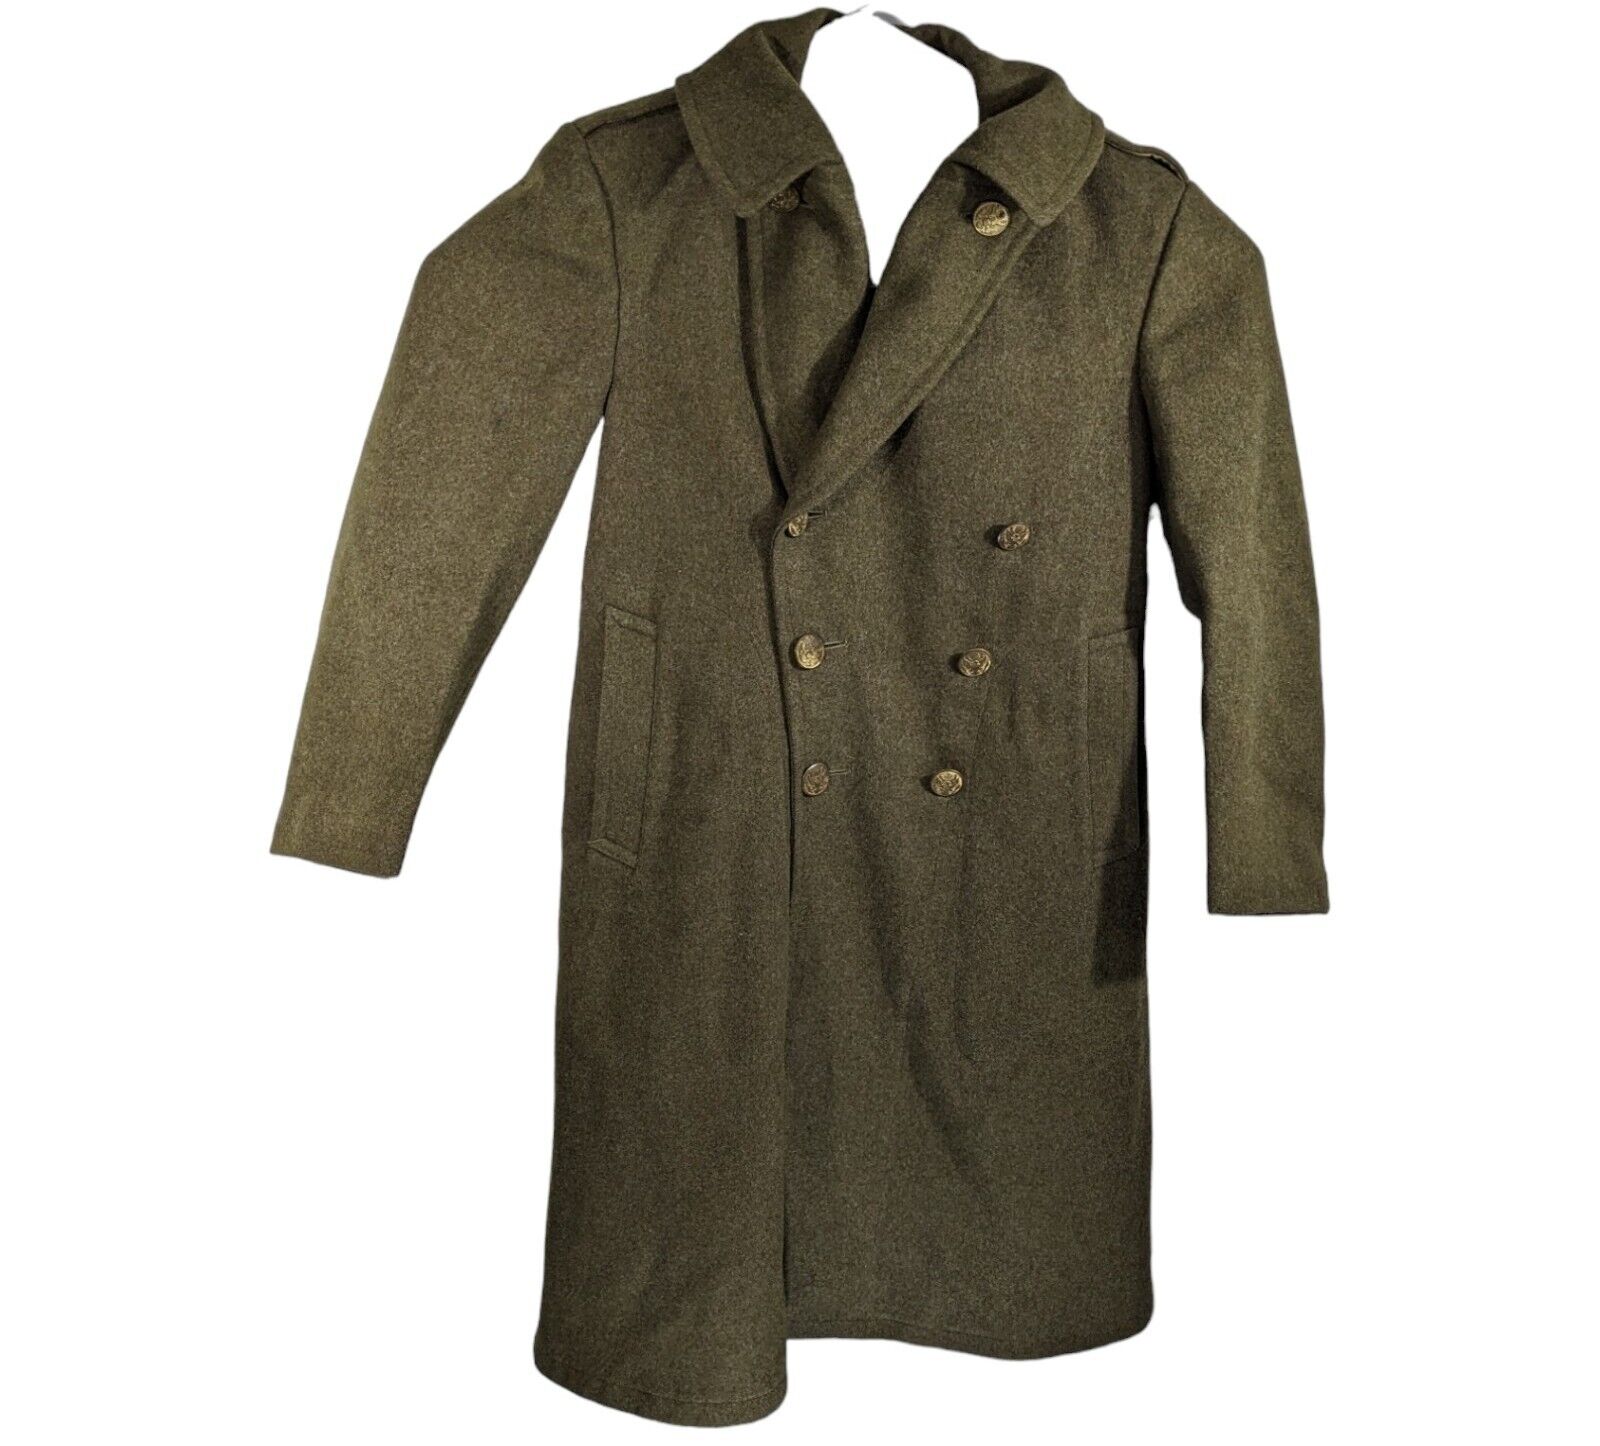 WWII Wool Overcoat Size 38s Short Solomon Goldstein Portnoy Trench Coat 1942 M-L